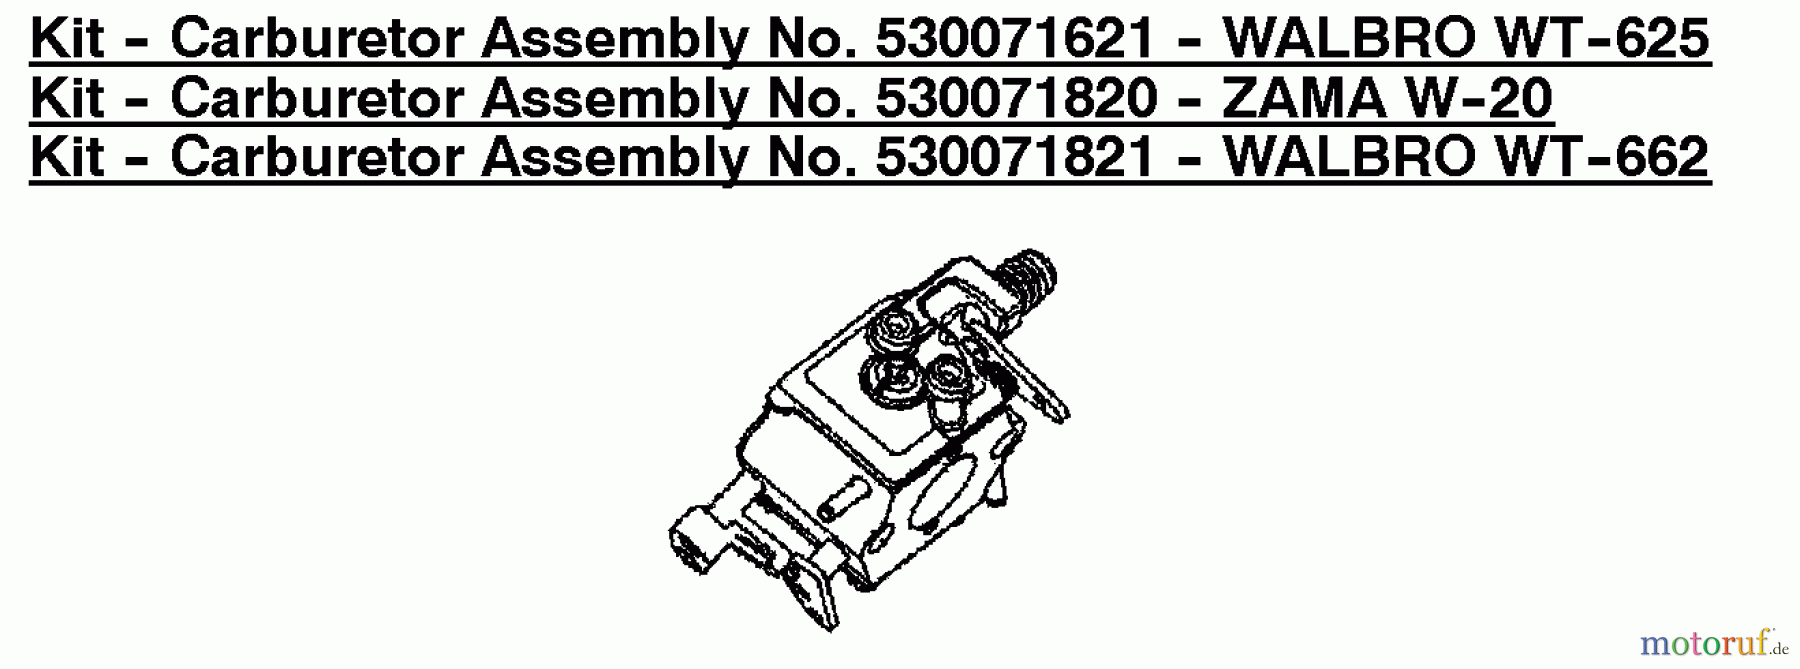  Poulan / Weed Eater Motorsägen PP220 (Type 2) - Poulan Pro Chainsaw Kit - Carburetor Assembly